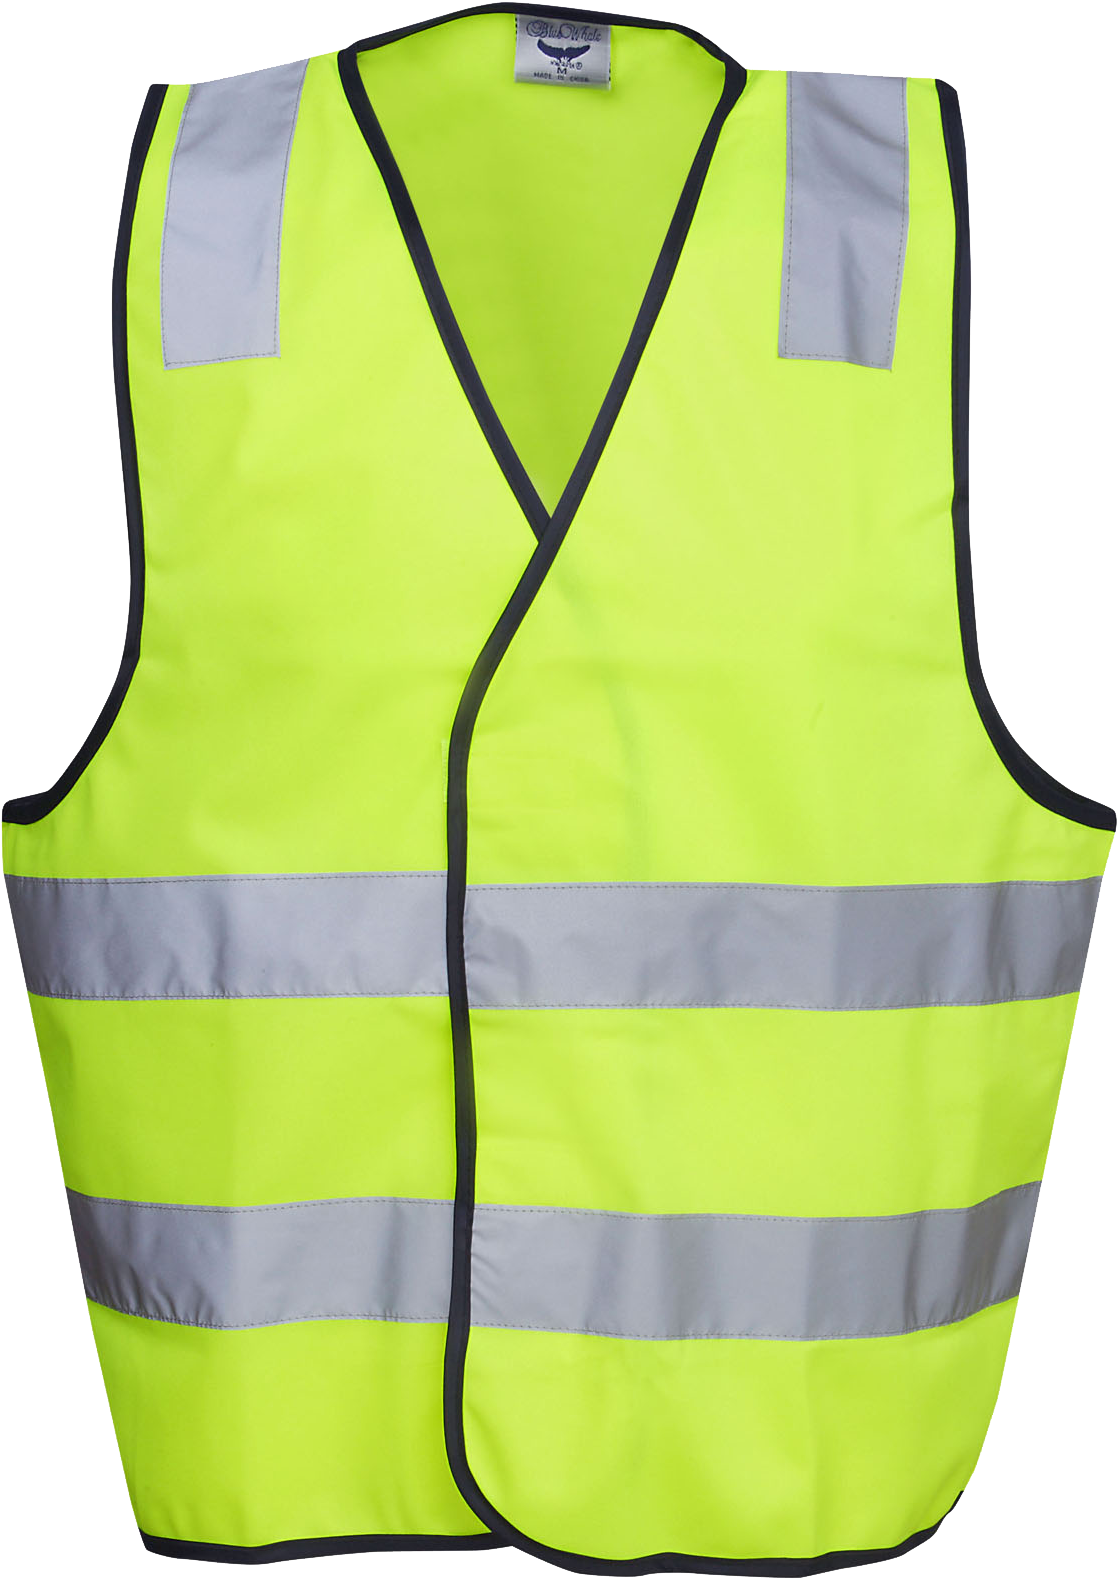 Pink Hi-viz Safety Day/night Vest - Safety Vest Front And Back (1231x1704)